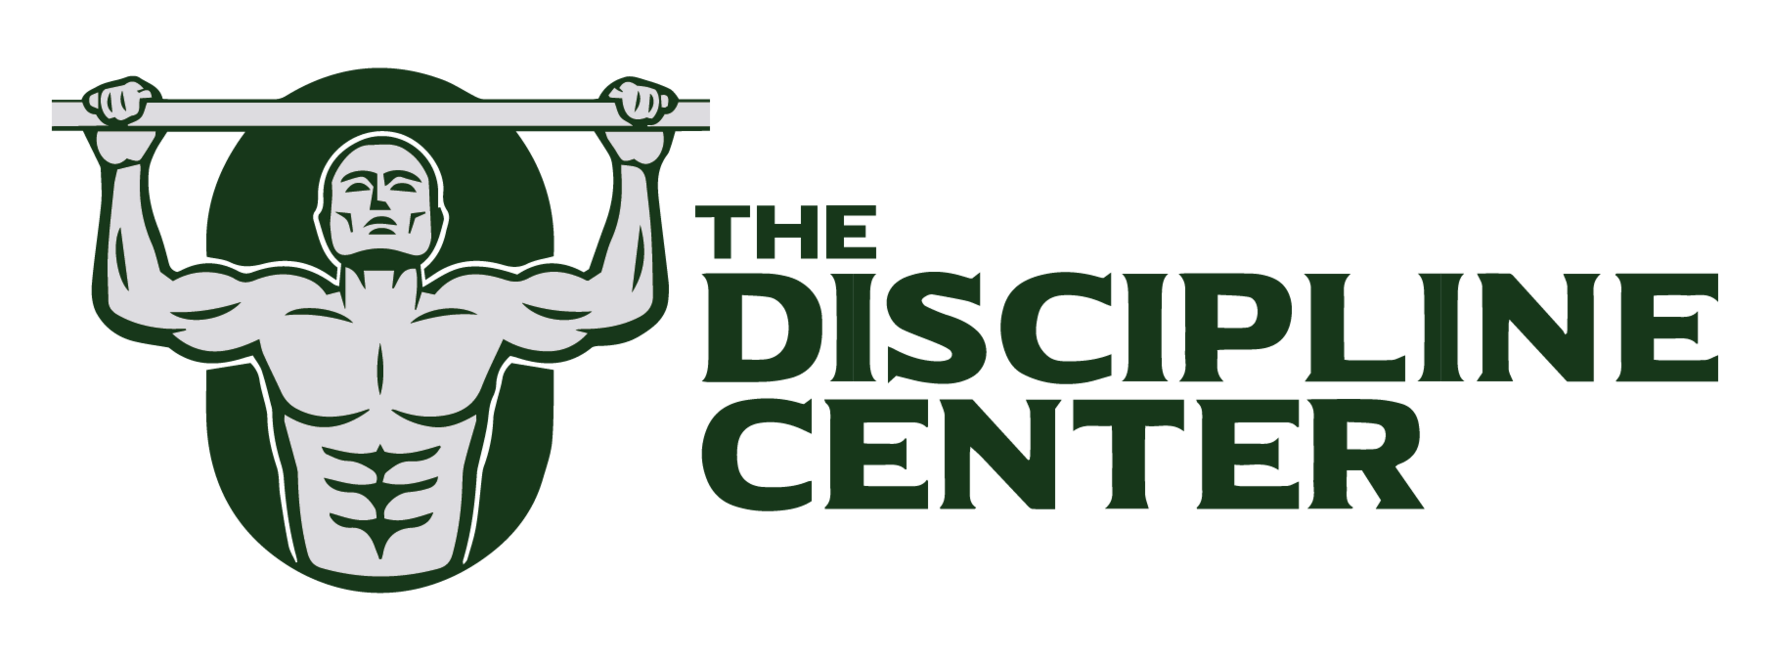 The Discipline Center